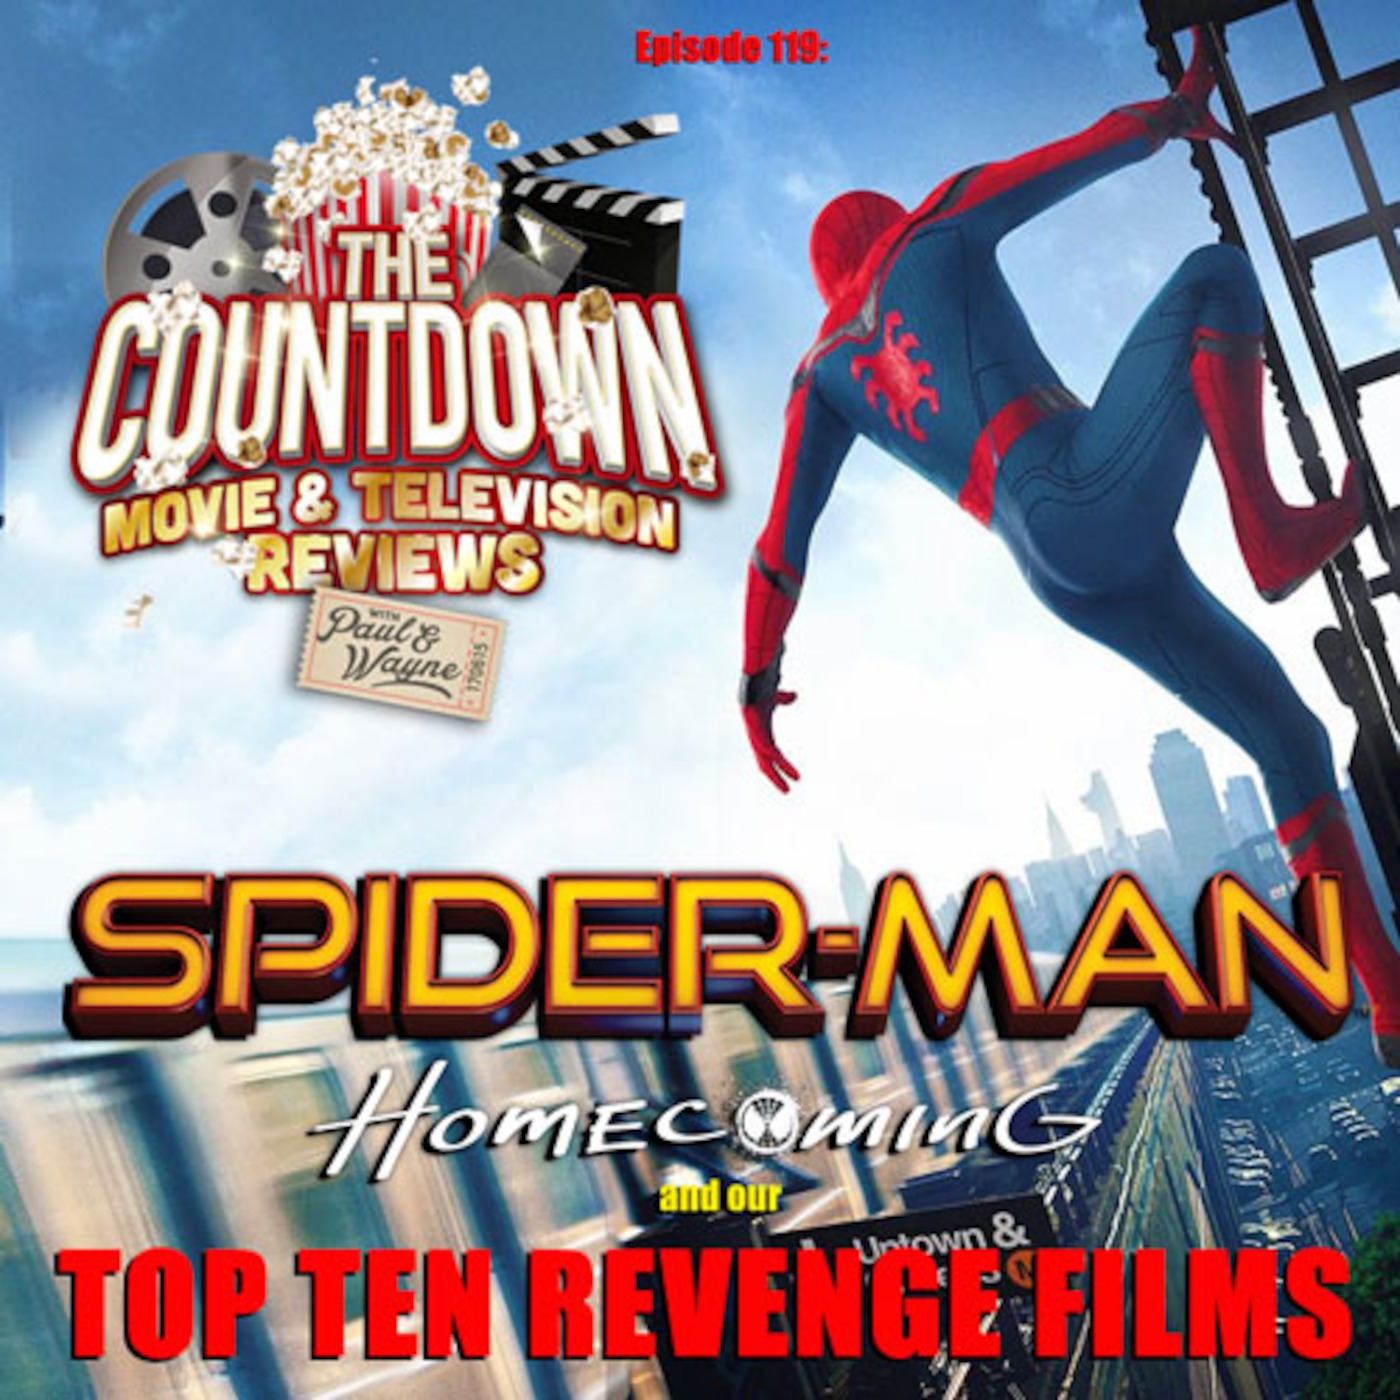 Episode 119: Top 10 Revenge Films / Spider-man: Homecoming